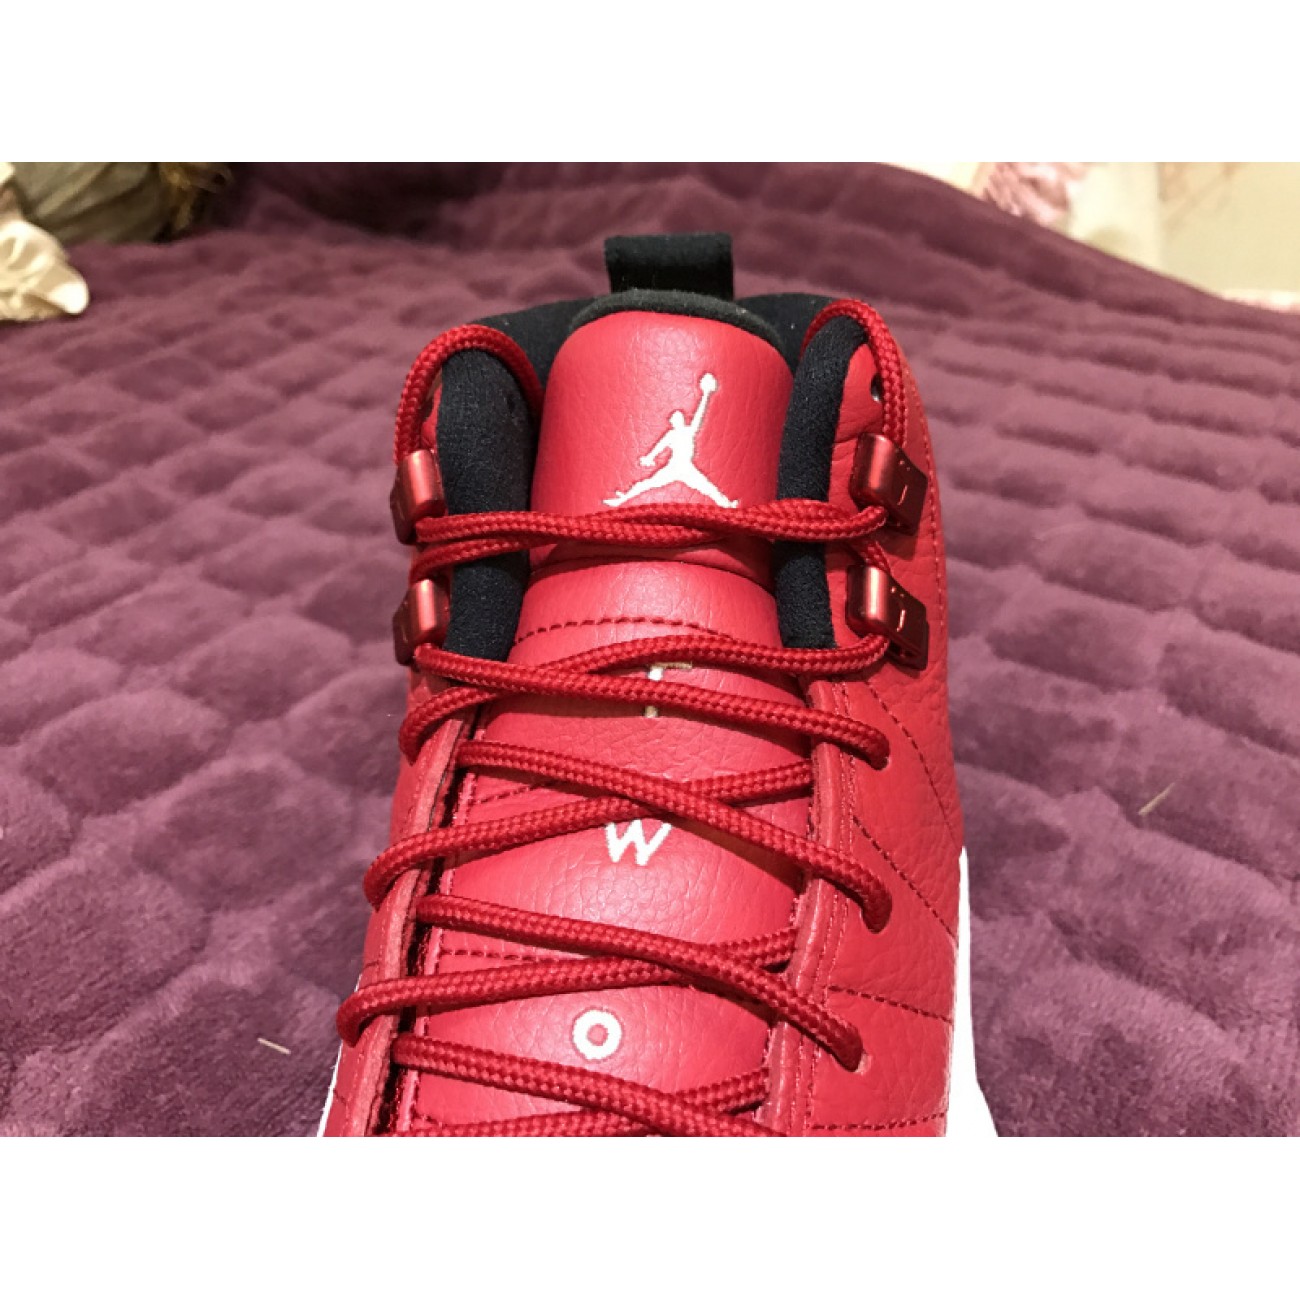 Air Jordan 12 "Gym Red" 130690-600